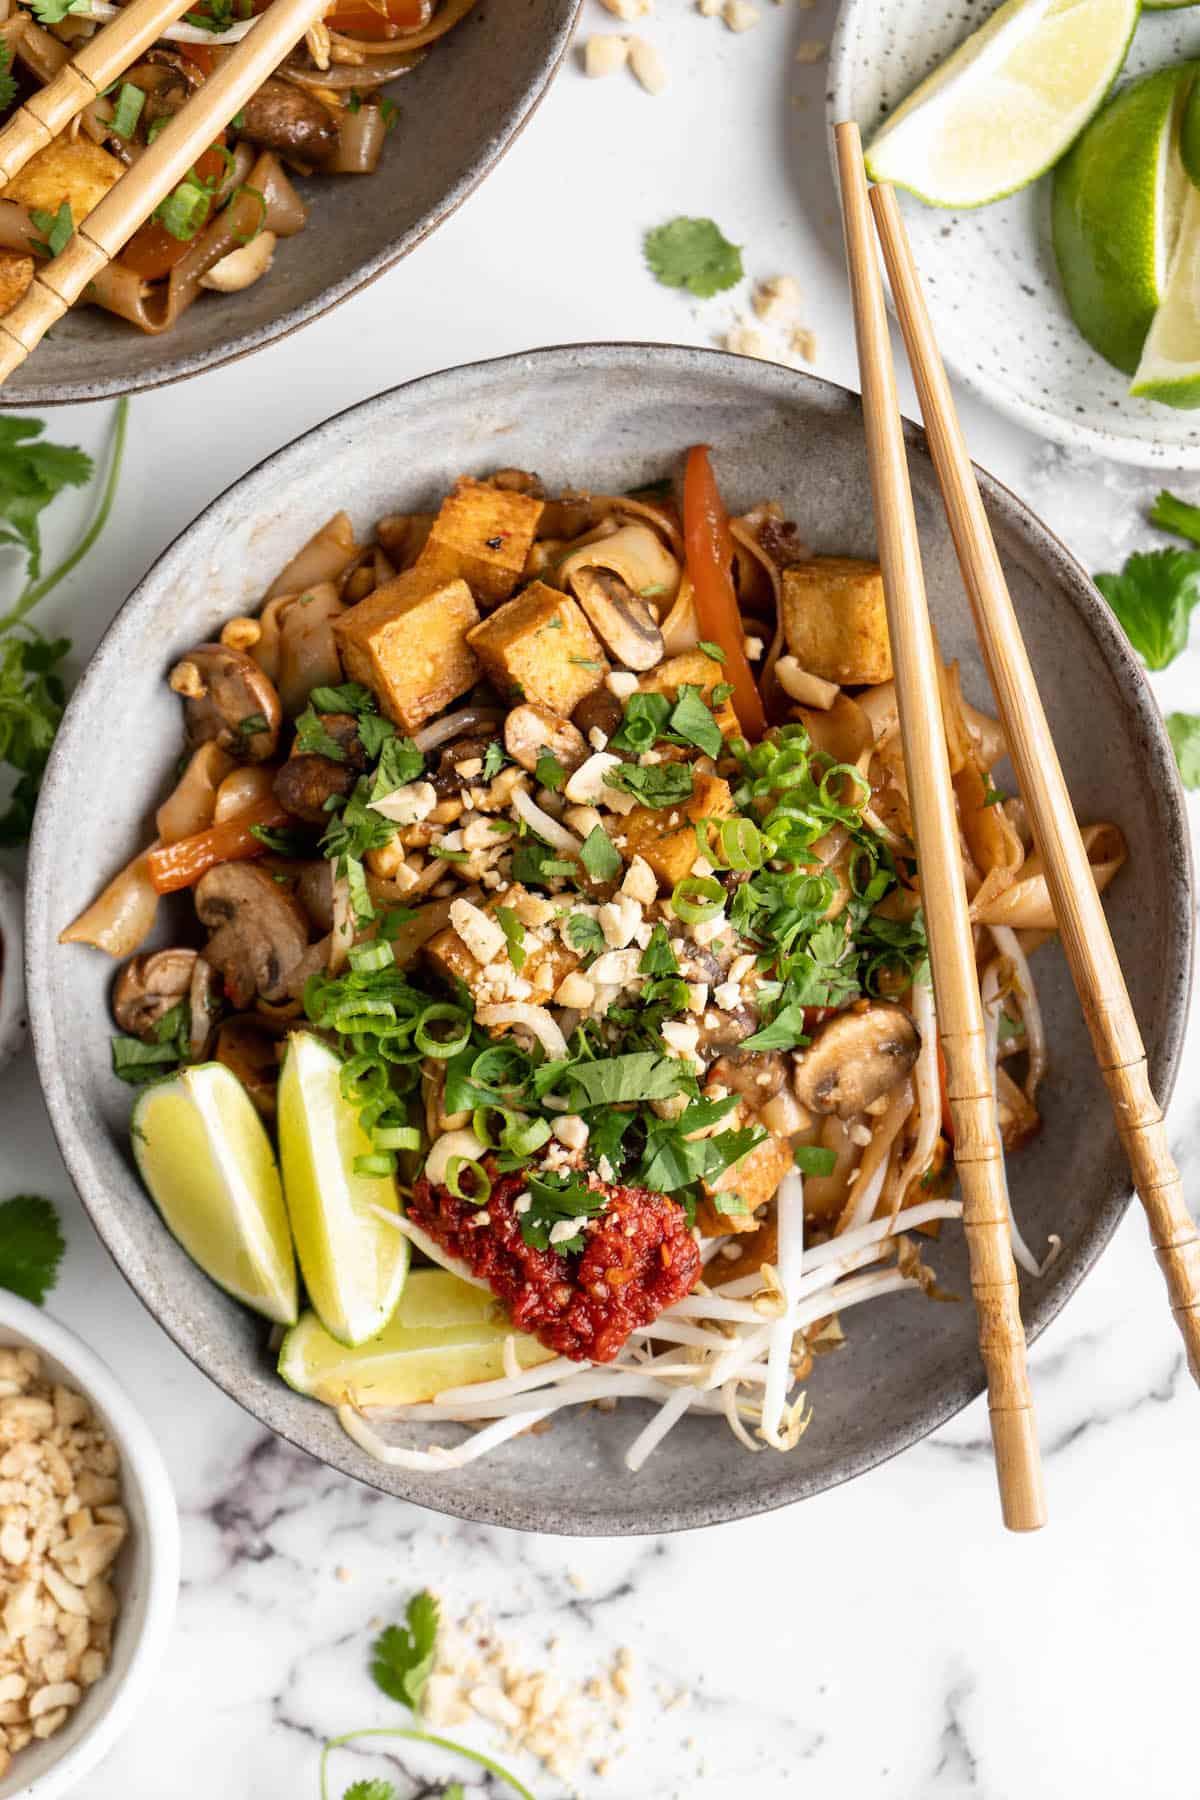 Overhead view of vegan Pad Thai with chopsticks